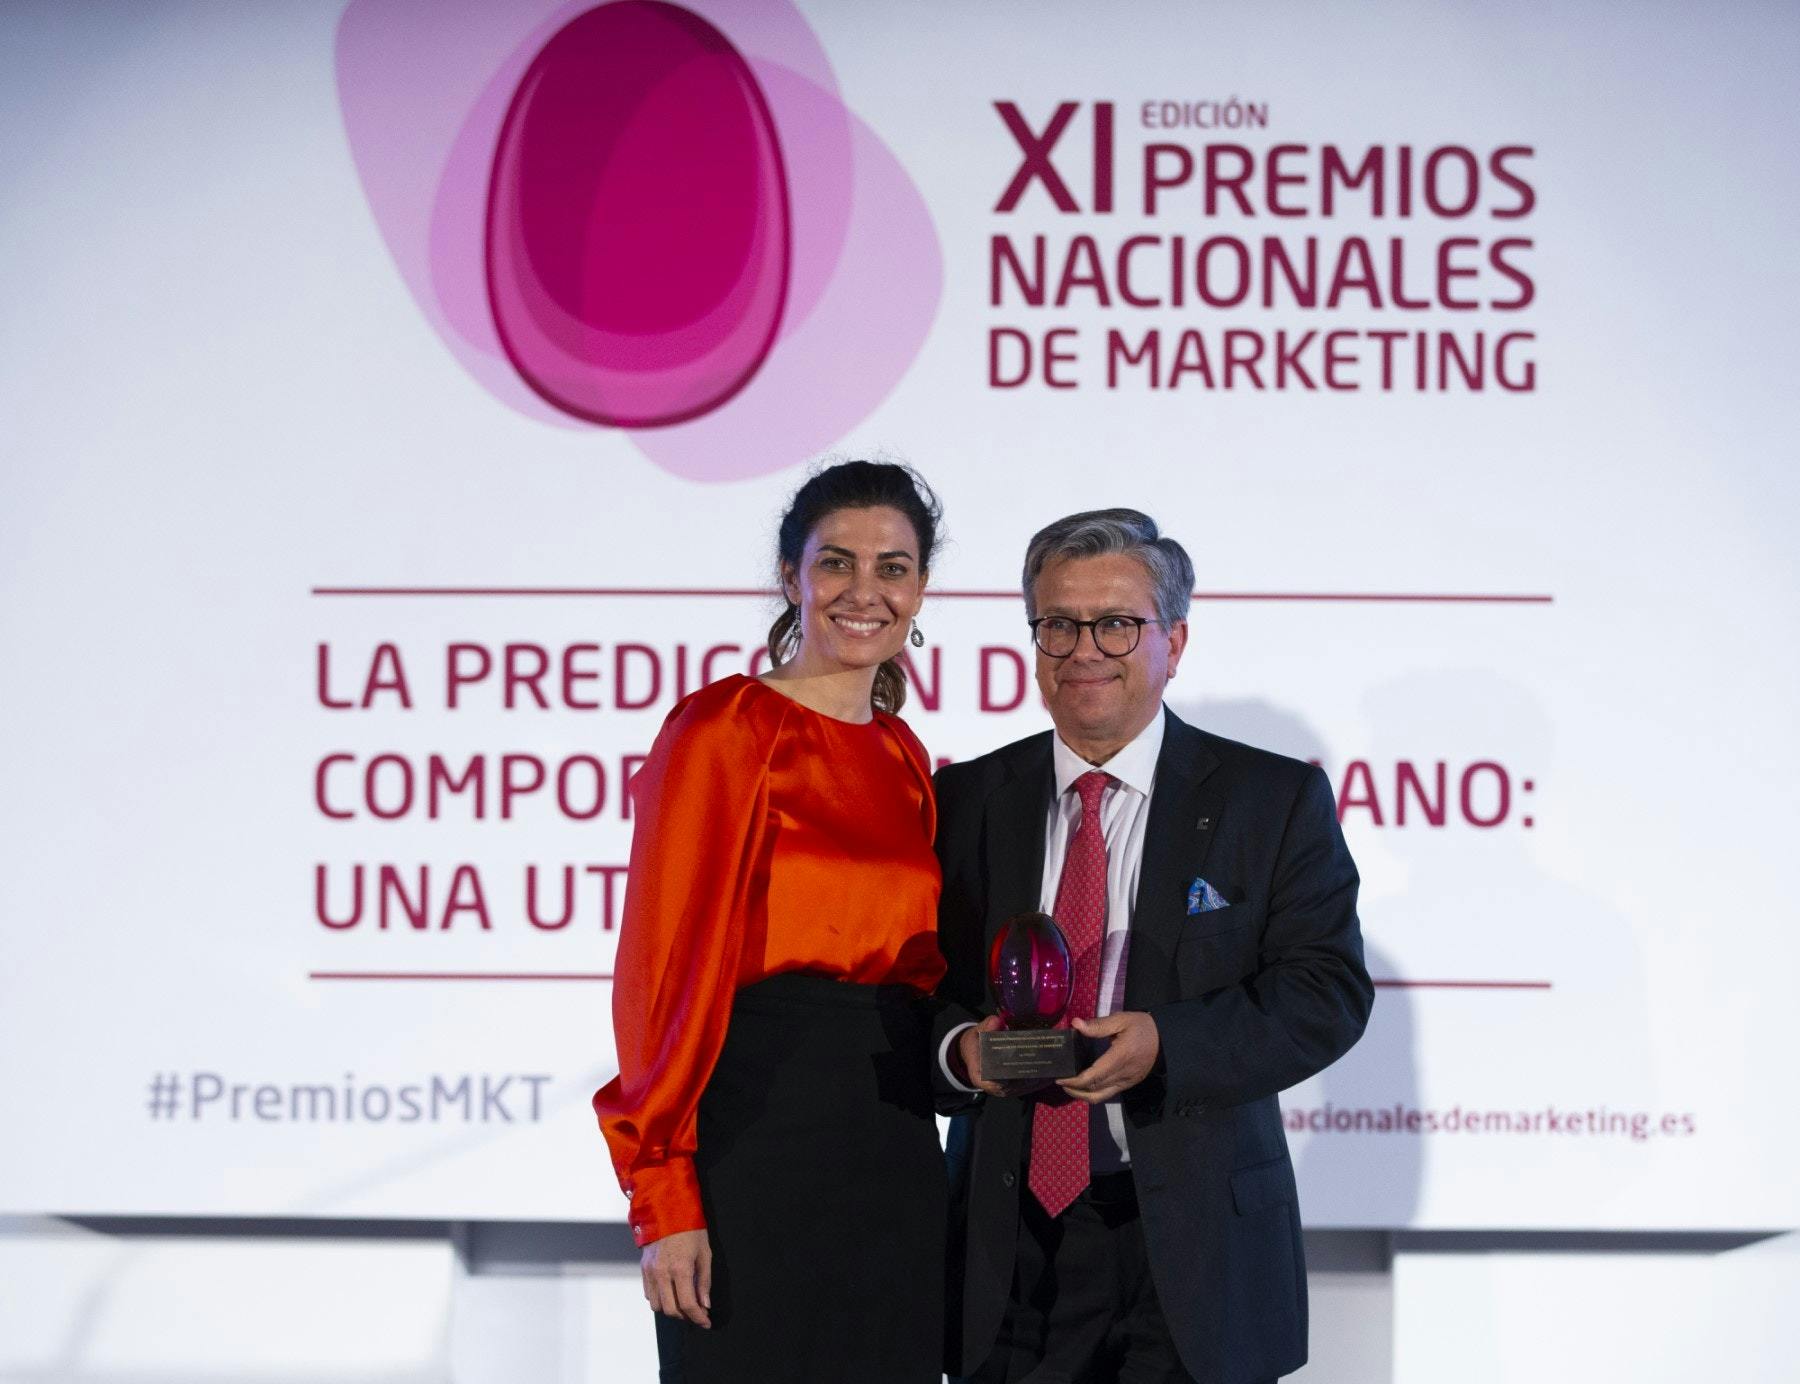 Santiago Alfonso Named 2019’s Best Marketing Professional